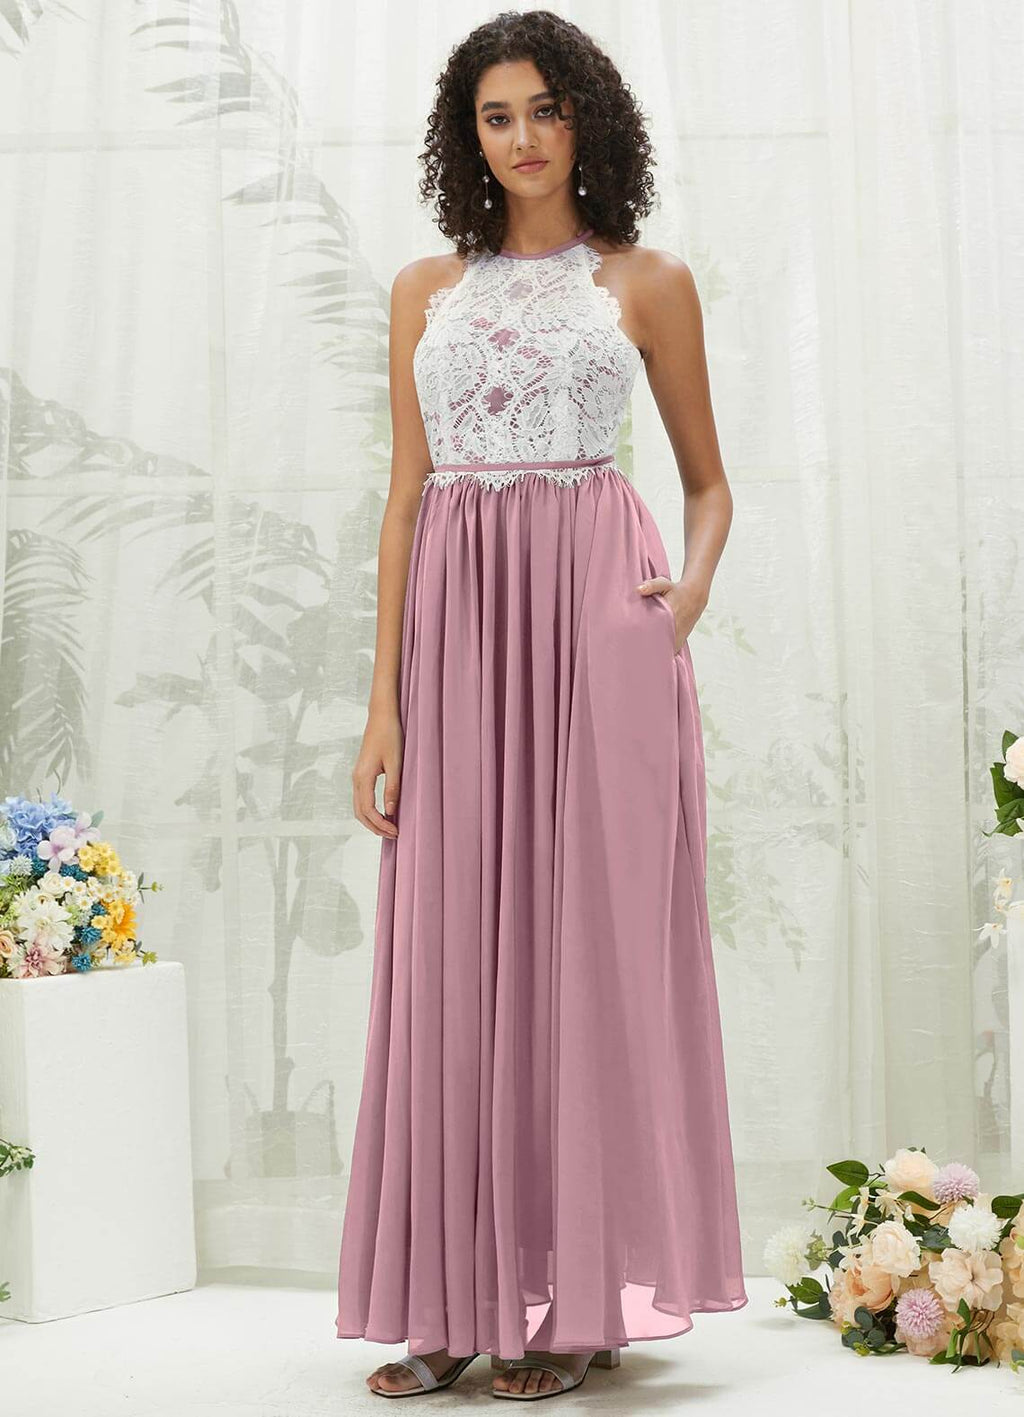 NZ Bridal Vintage Mauve Chiffon Floor Length Bridesmaid Dress With Pocket TC0426 Heidi a